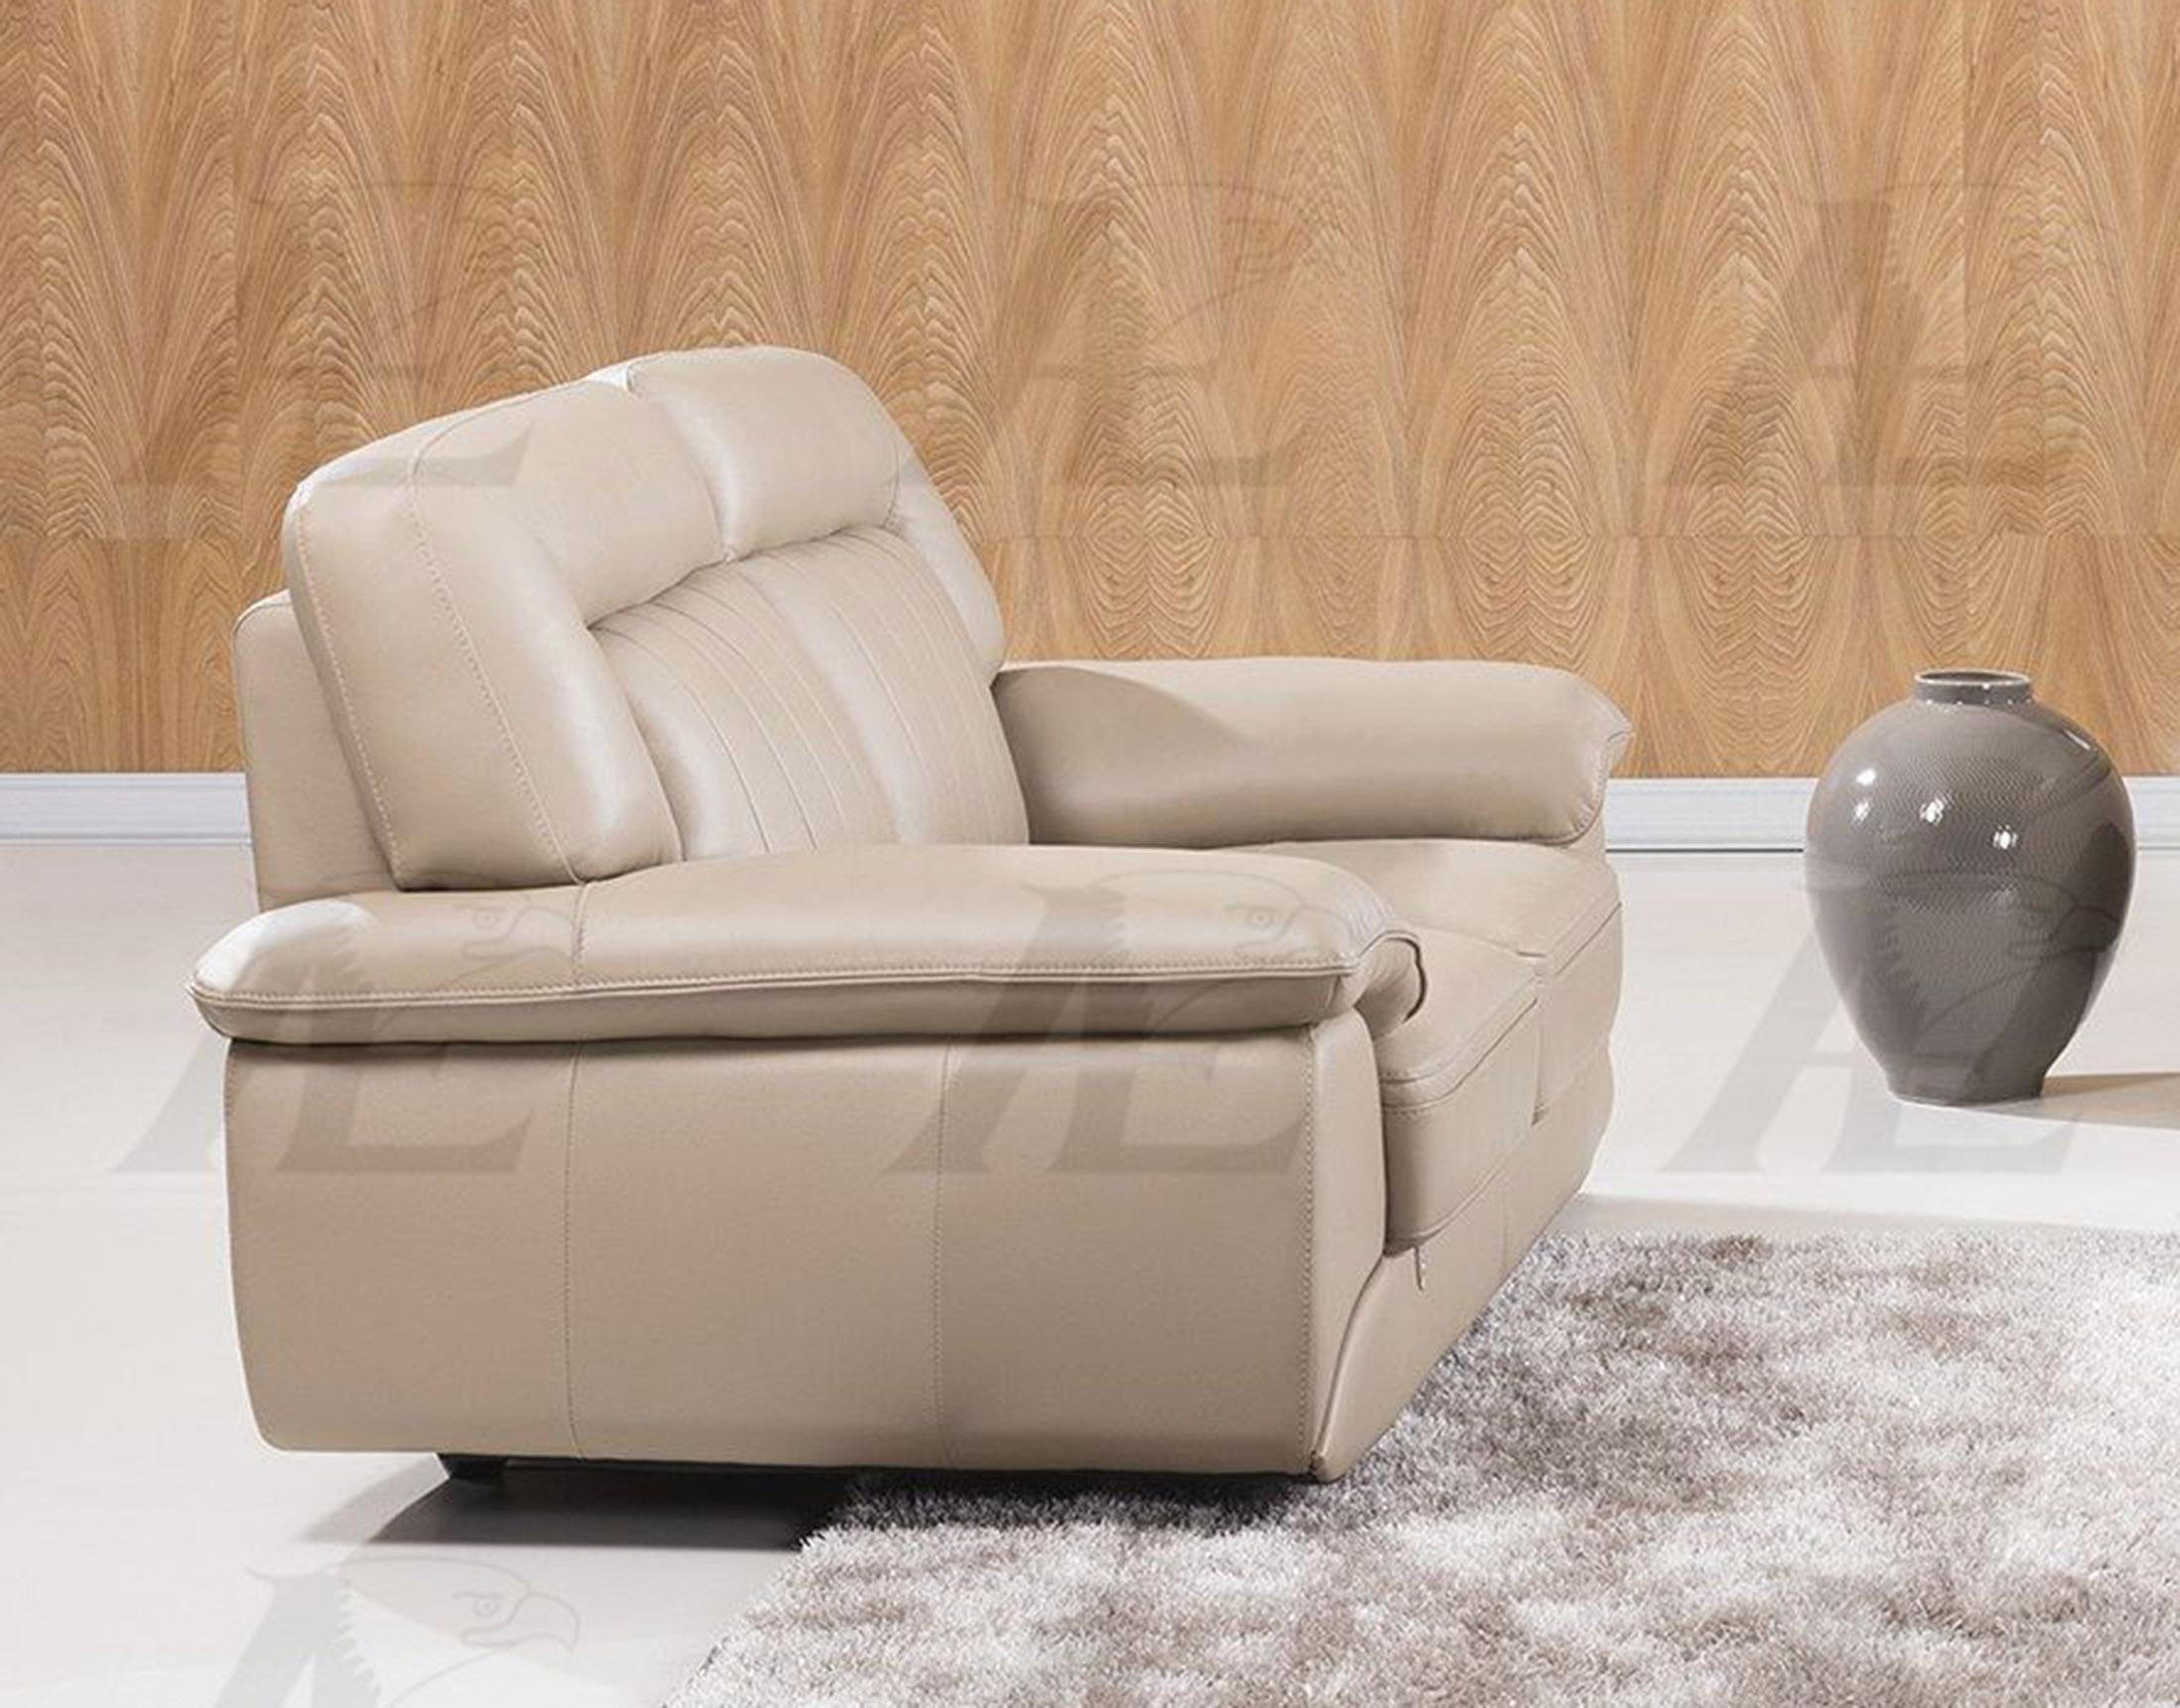 

    
American Eagle Furniture EK072-TAN Tan Top Grain Italian Leather Sofa Modern
